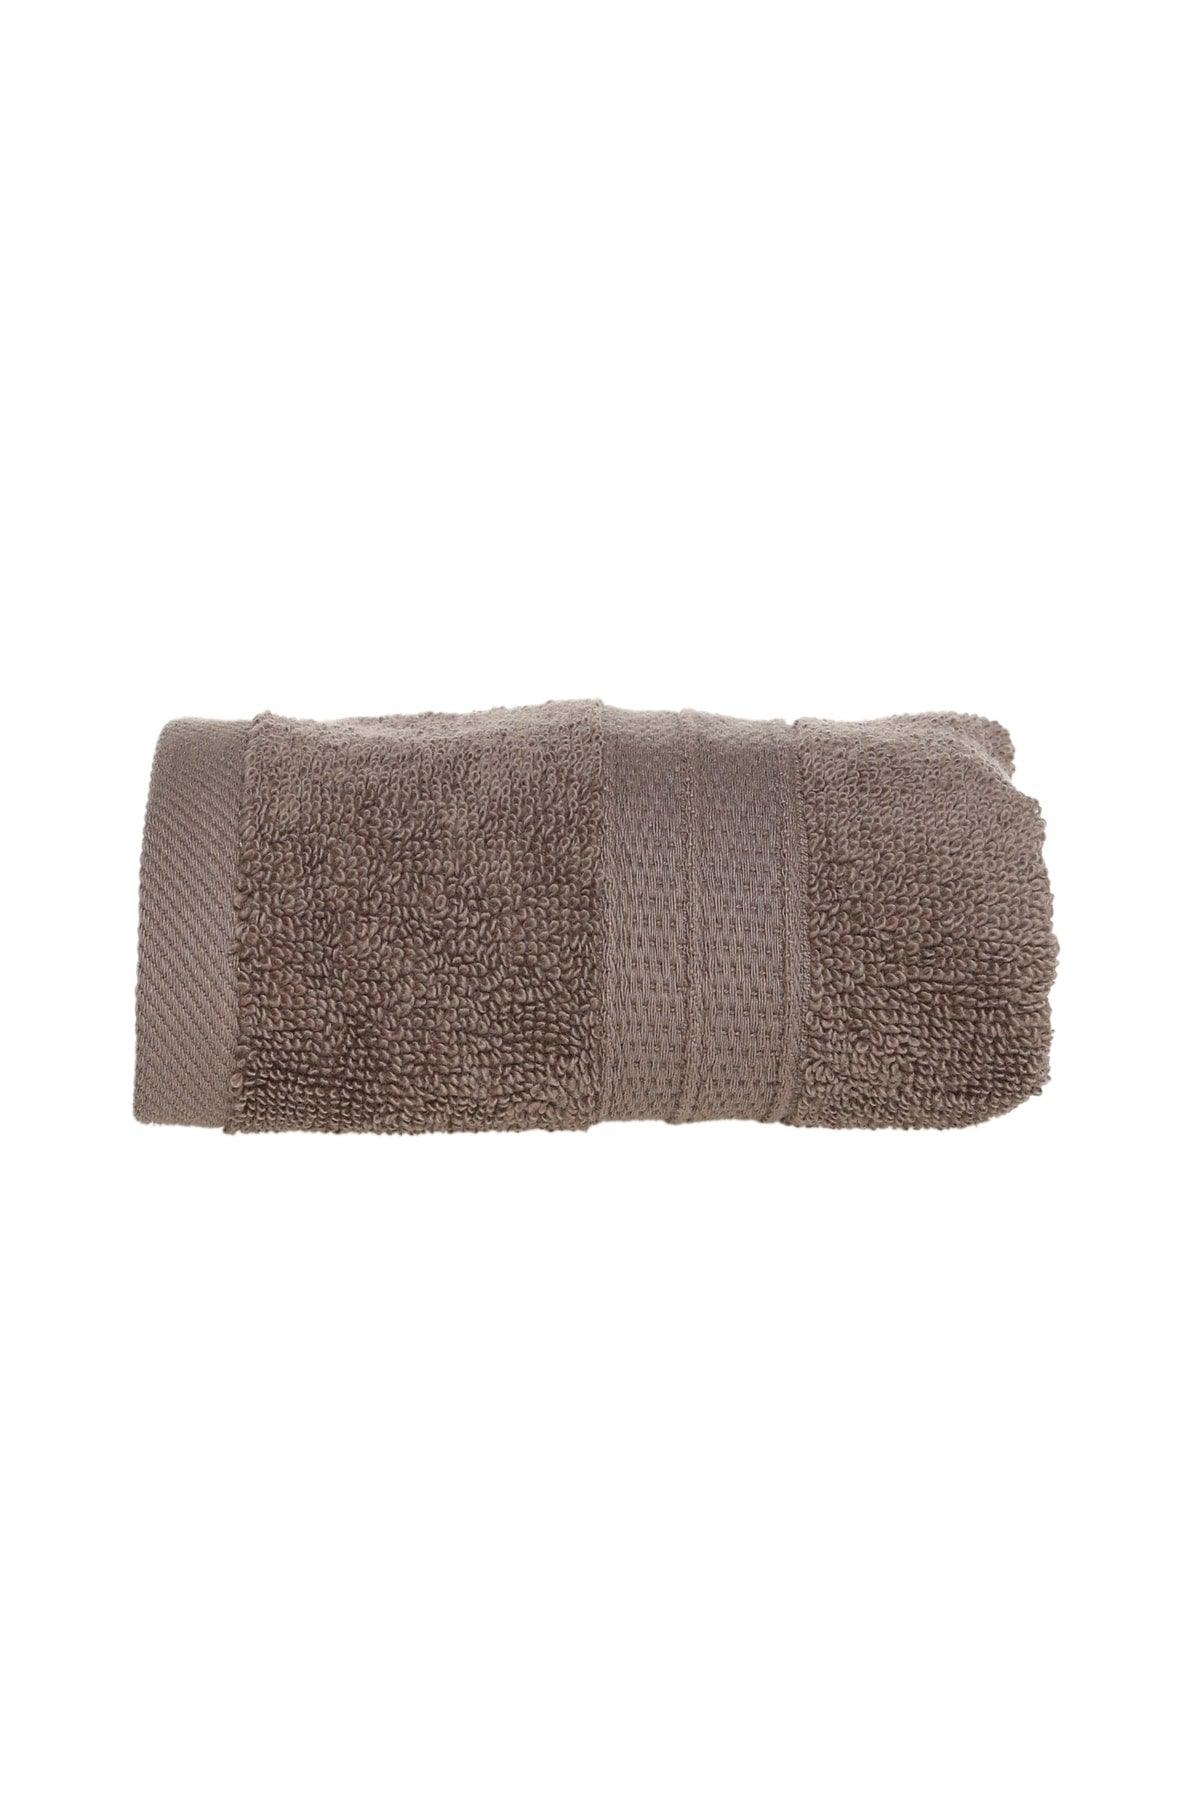 Towel Dark Brown 30x50 Cm - Swordslife